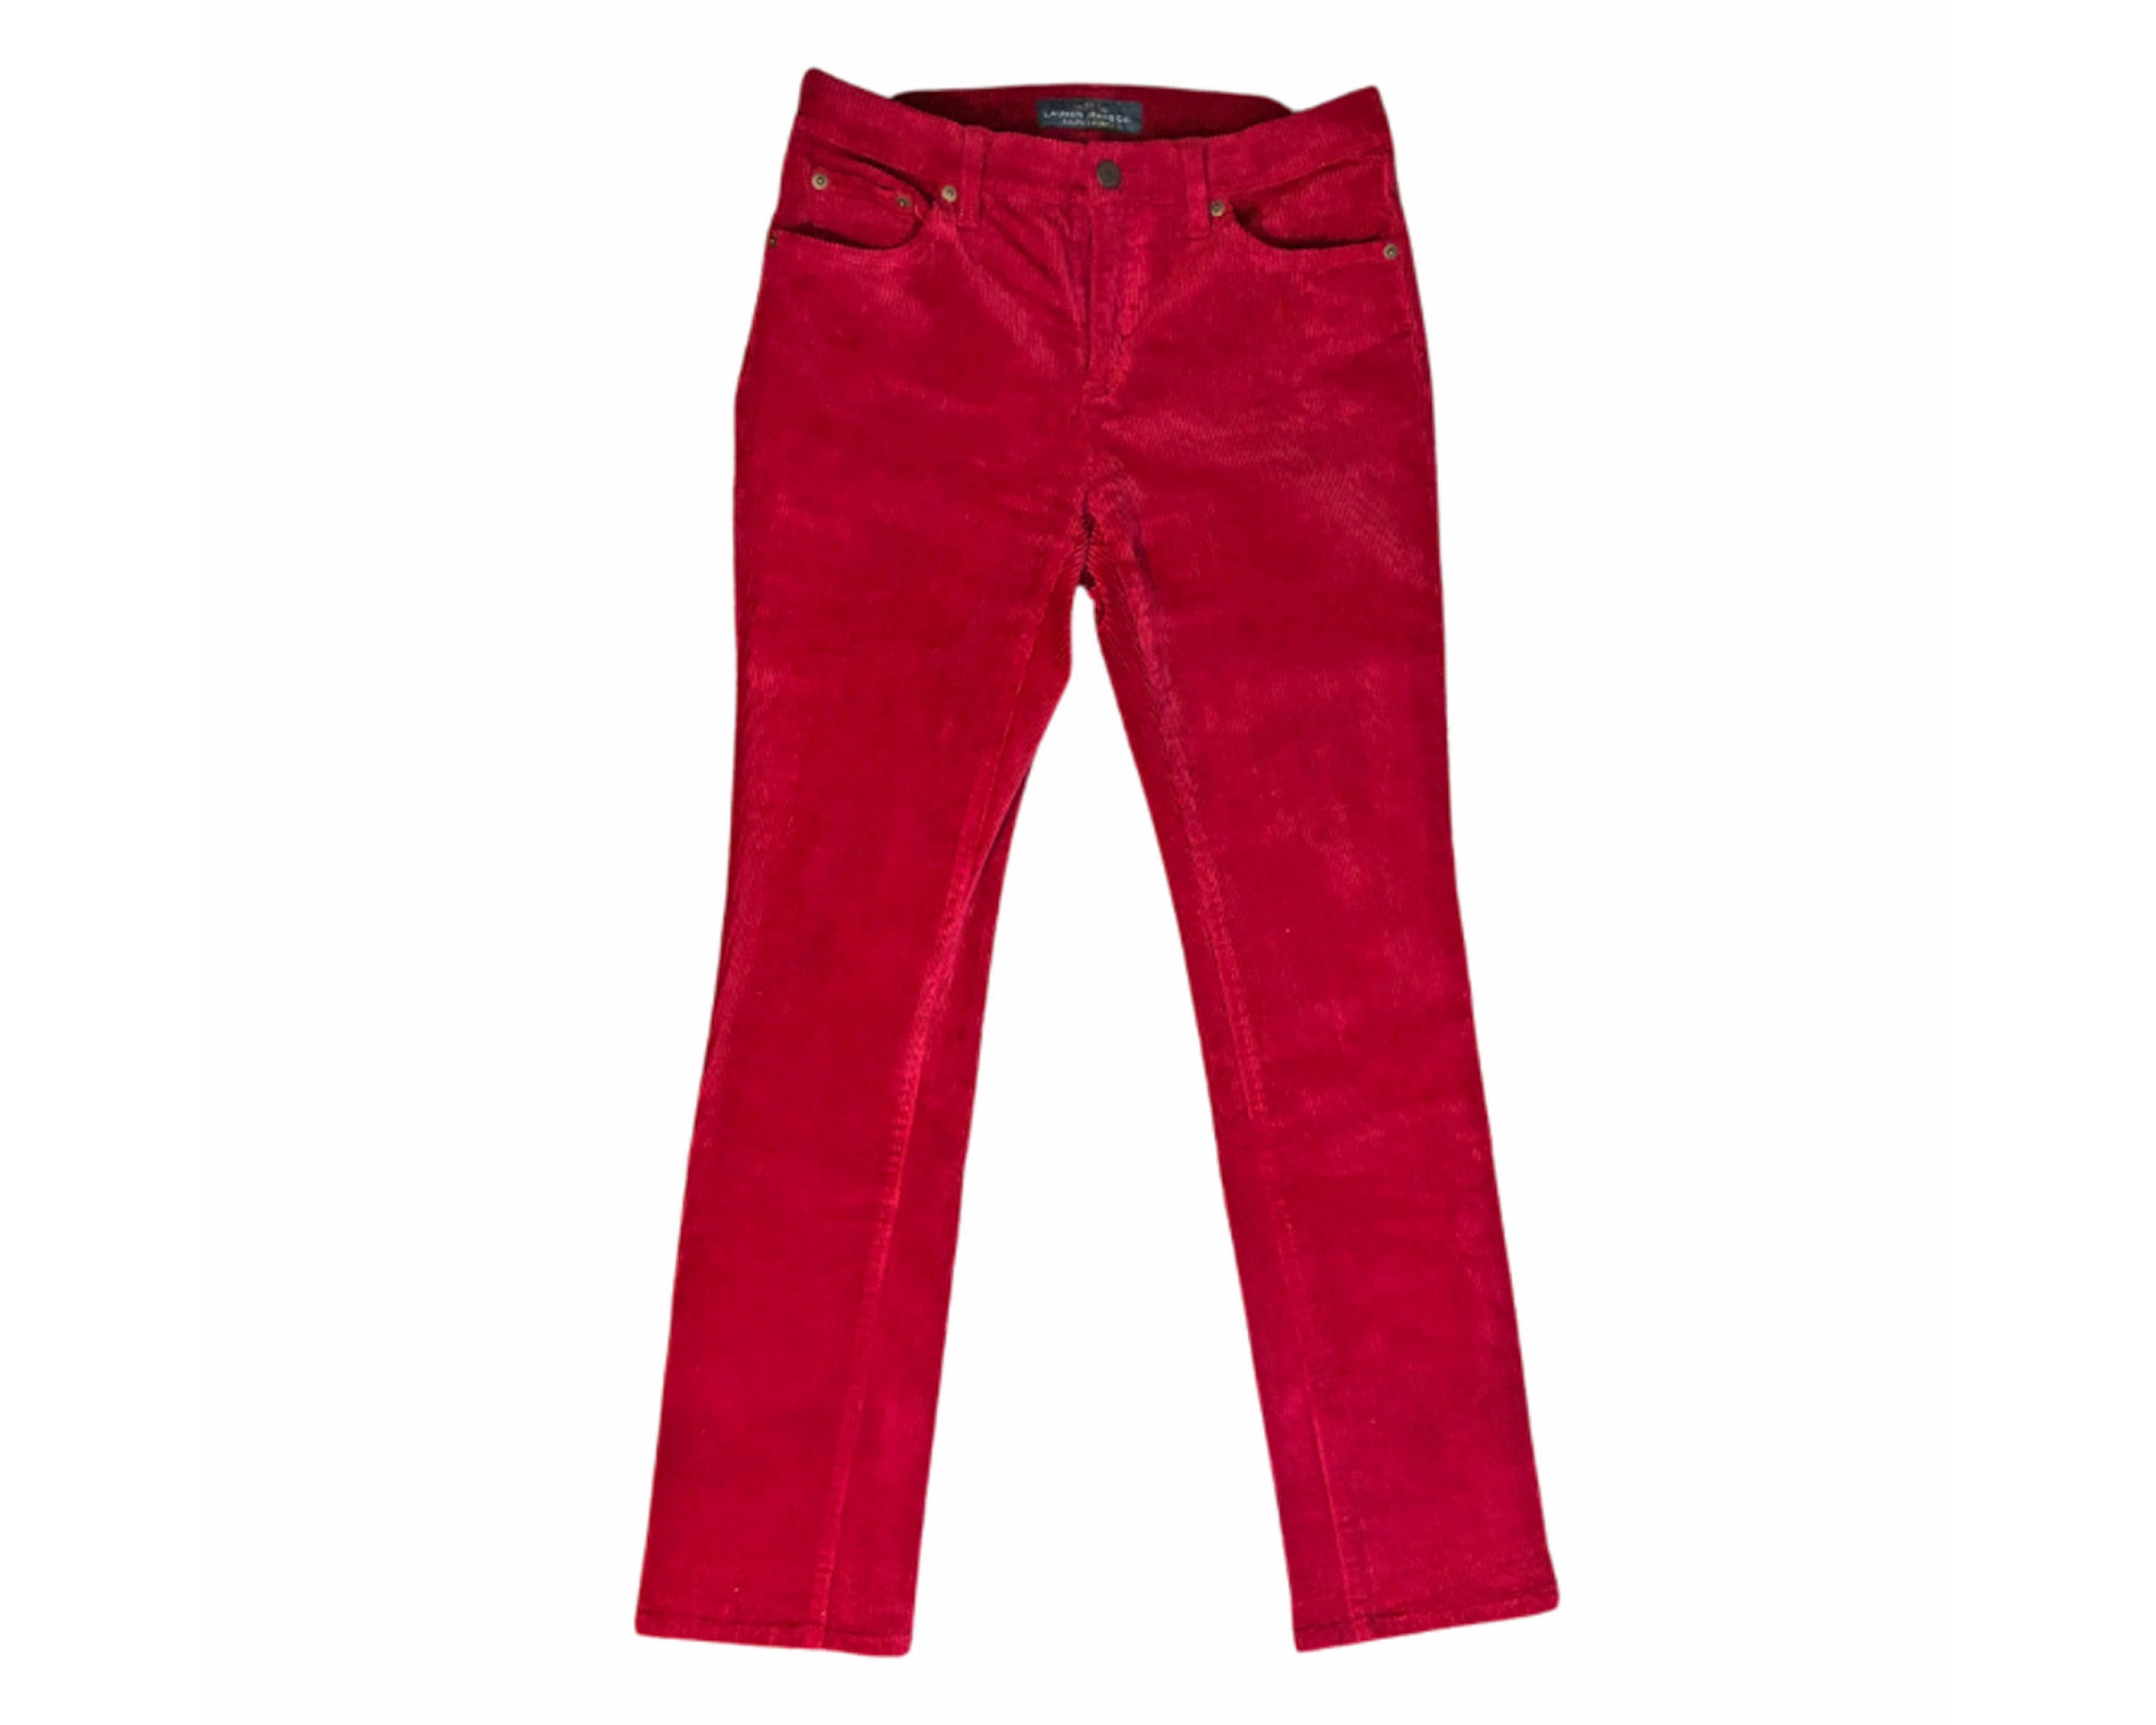 RALPH LAUREN Burgundy Red Corduroy Pants Women's Size 2 - Etsy